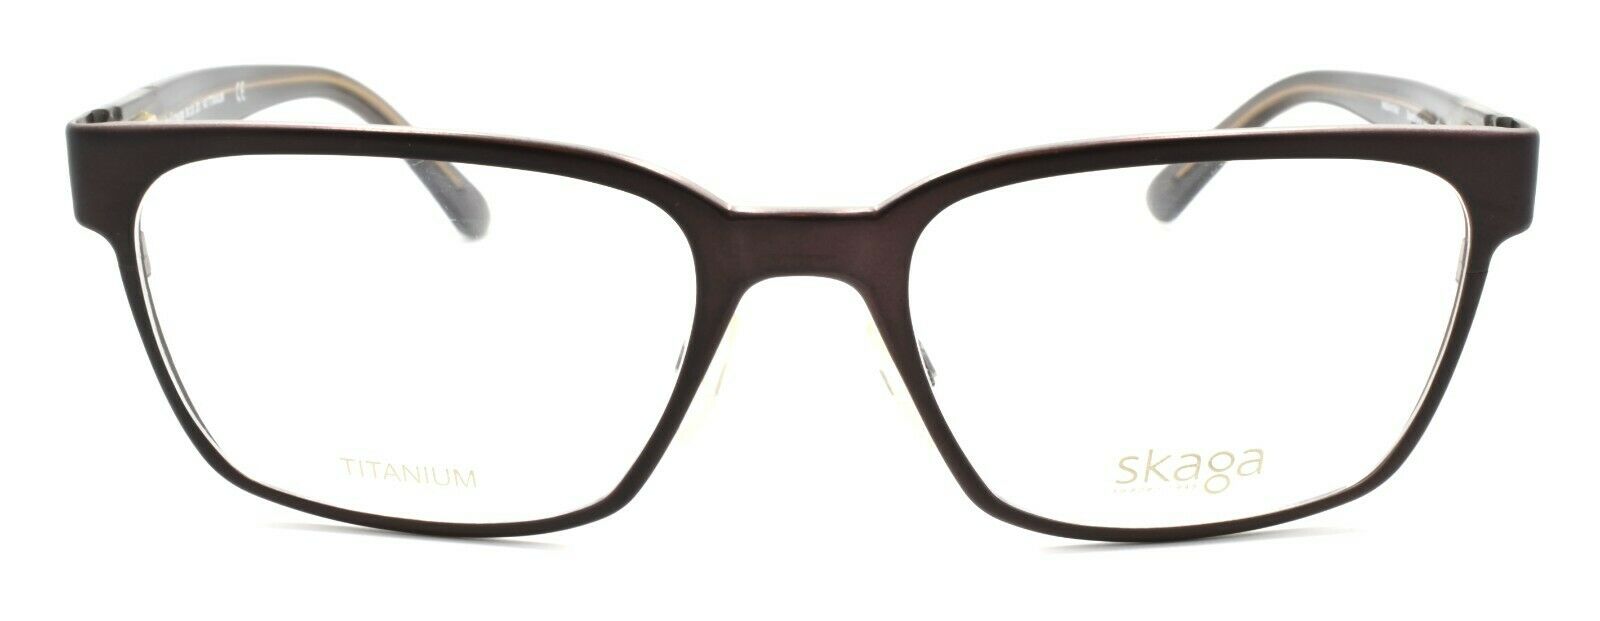 2-Skaga 3755-U Joakim 201 Men's Eyeglasses Frames TITANIUM 56-20-140 Brown Italy-IKSpecs